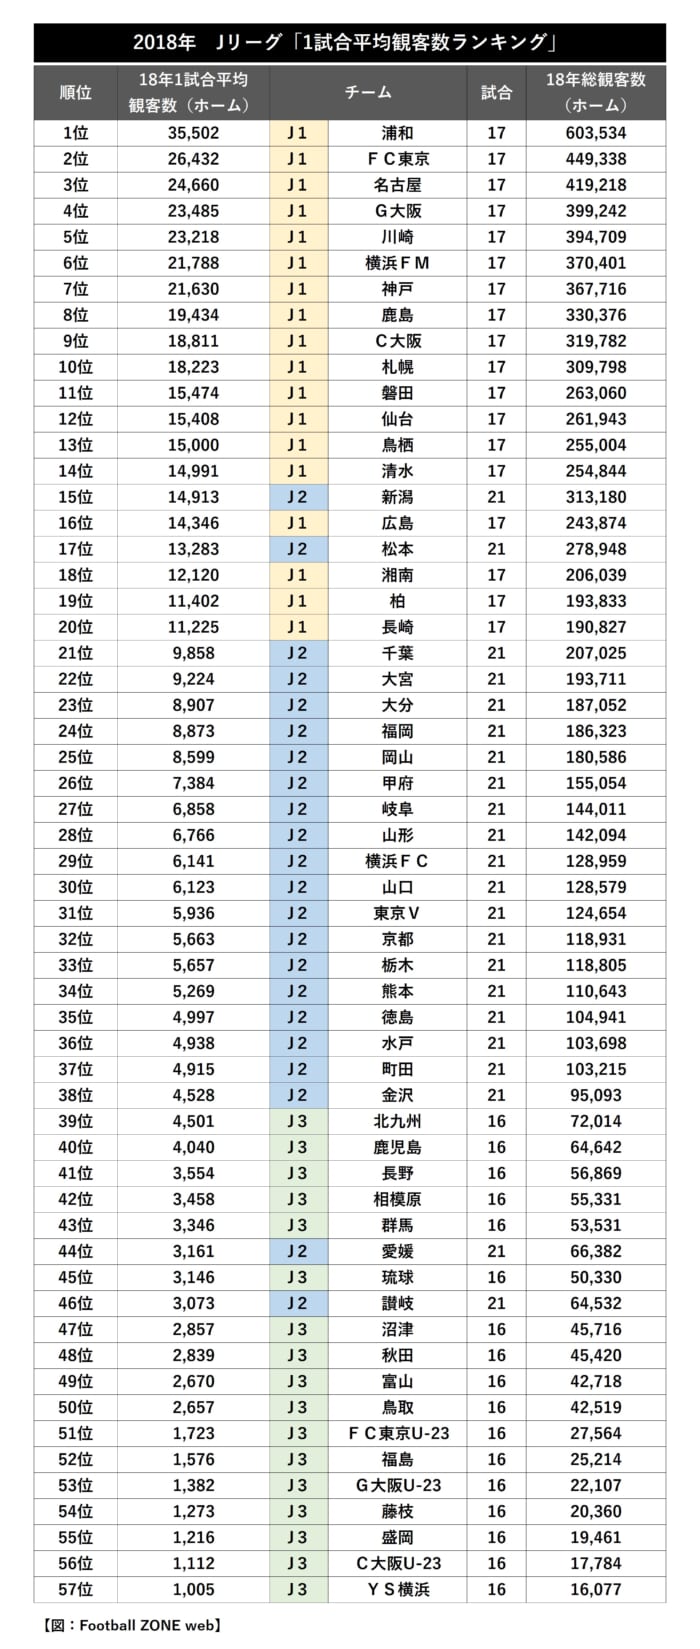 18 Jリーグ 1試合平均観客数ランキング 日刊 しし丸日記 横浜fc と 食 のブログ